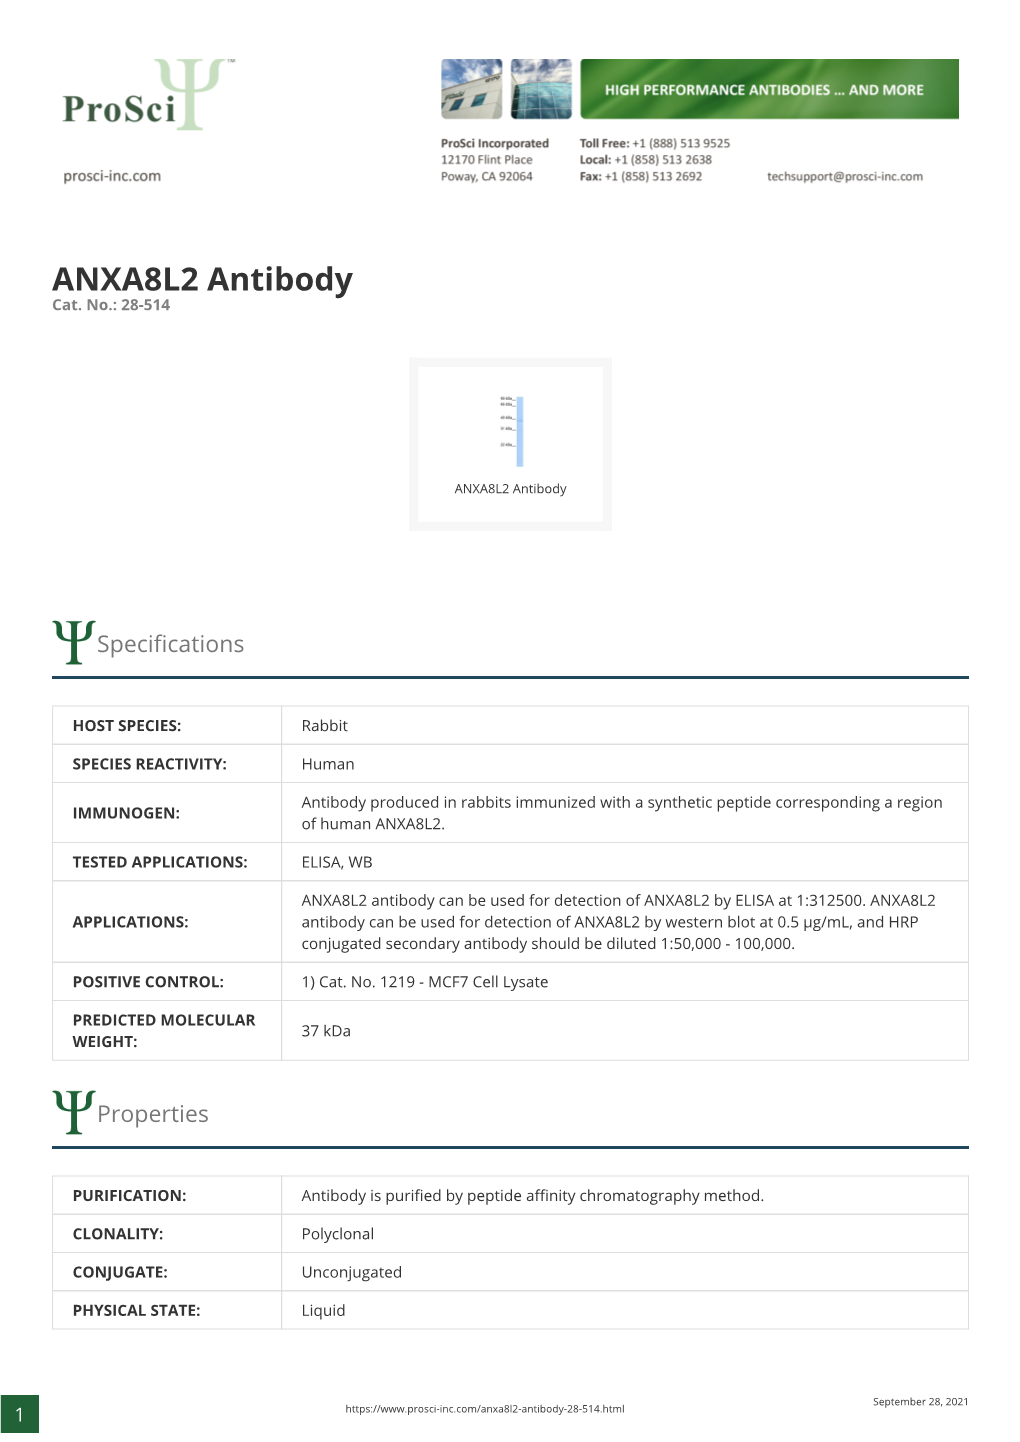 ANXA8L2 Antibody Cat